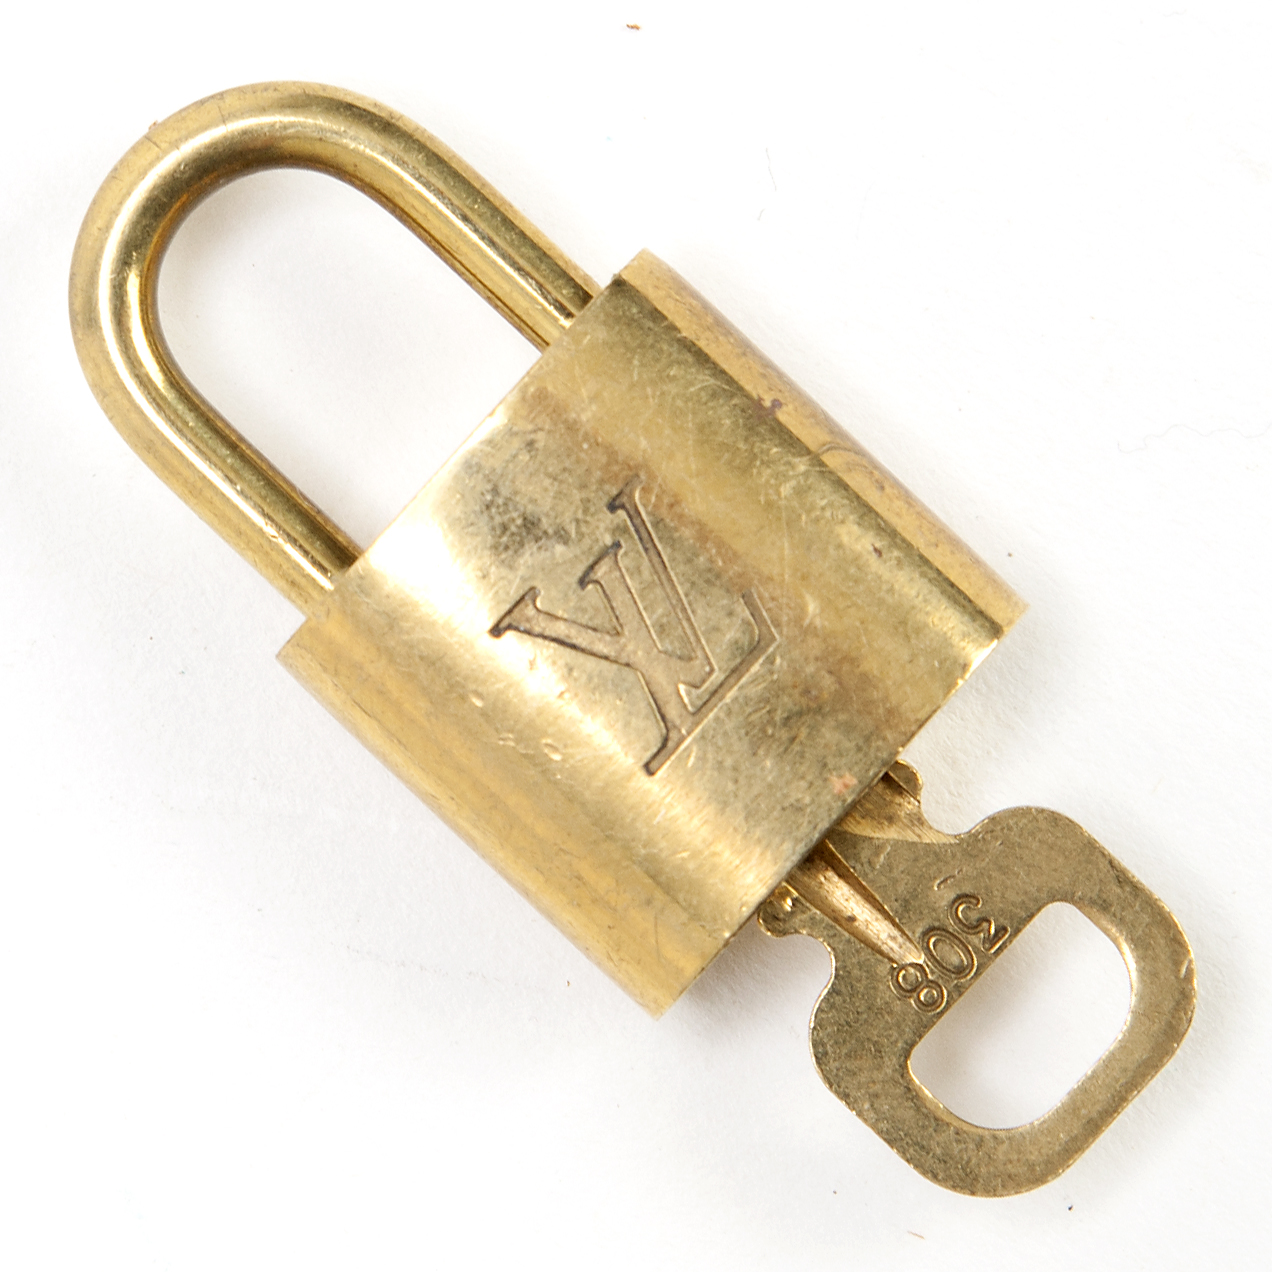 Louis Vuitton Padlock and One Key 316 Lock Brass 10227 